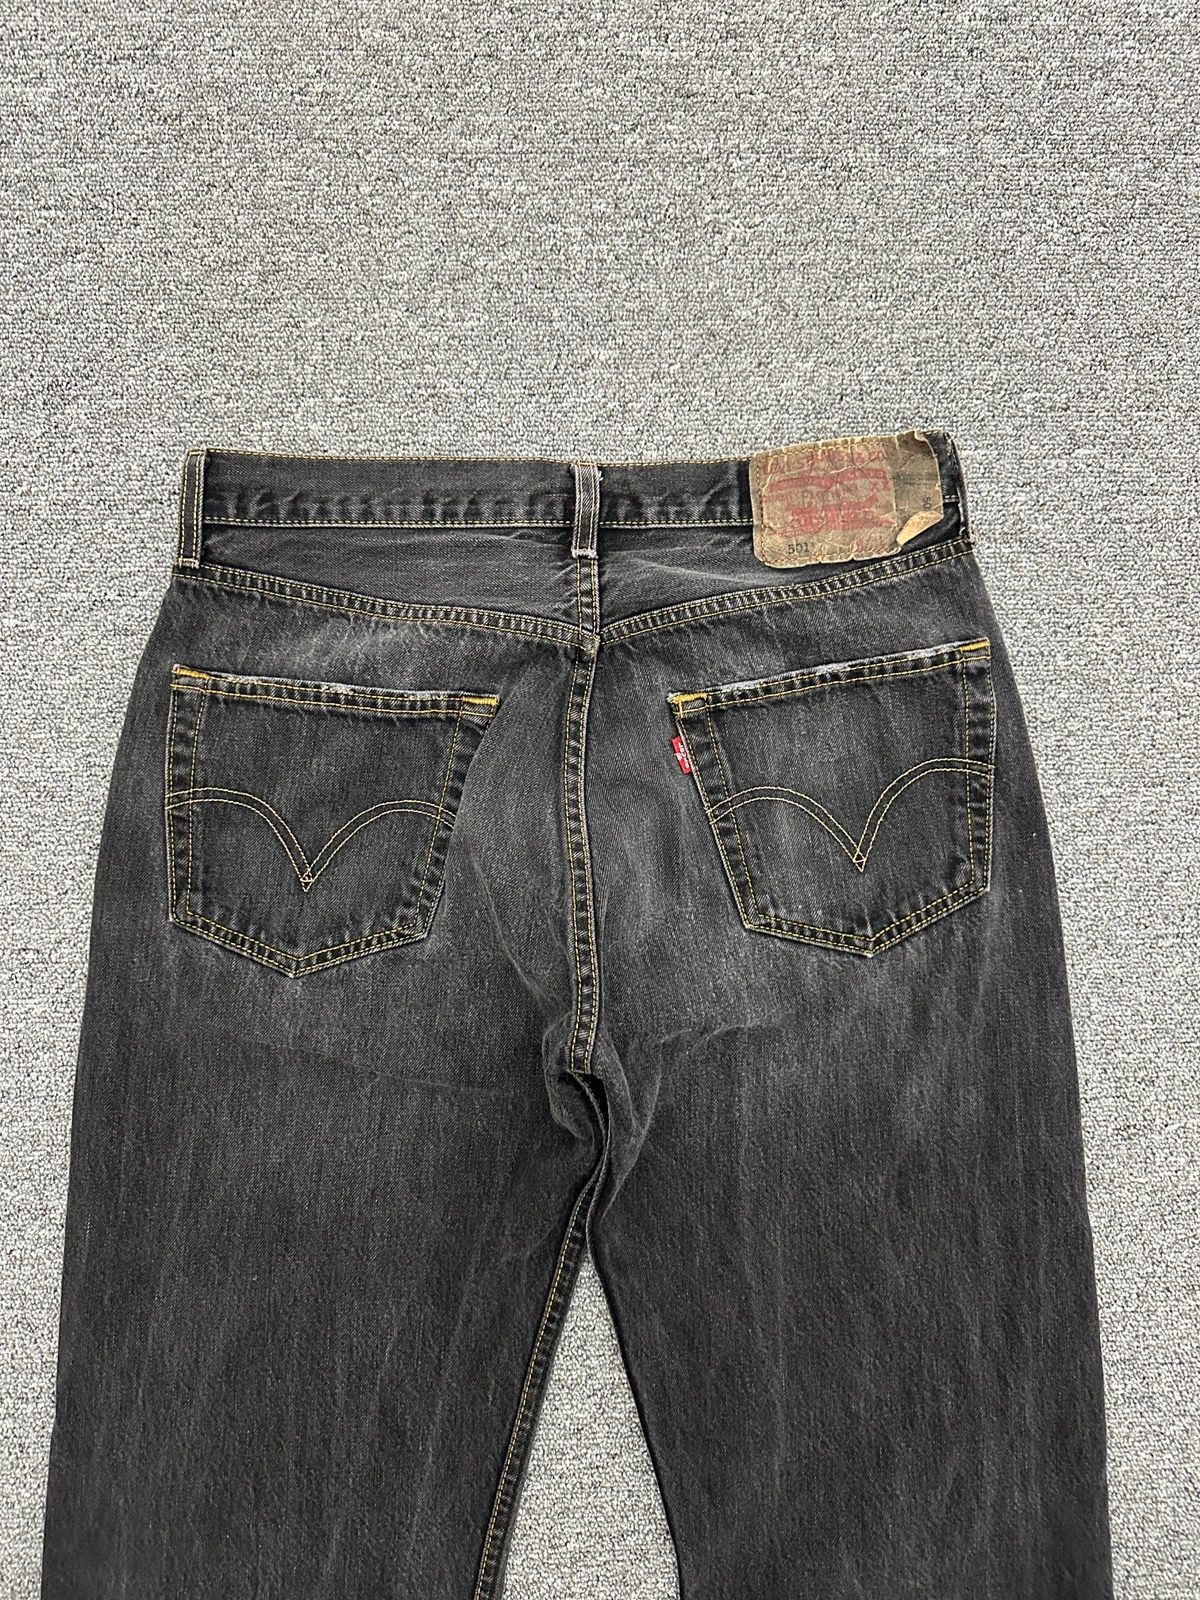 Vintage Vintage 501 Levi’s Faded Black Denim Pants Size US 32 / EU 48 - 6 Thumbnail